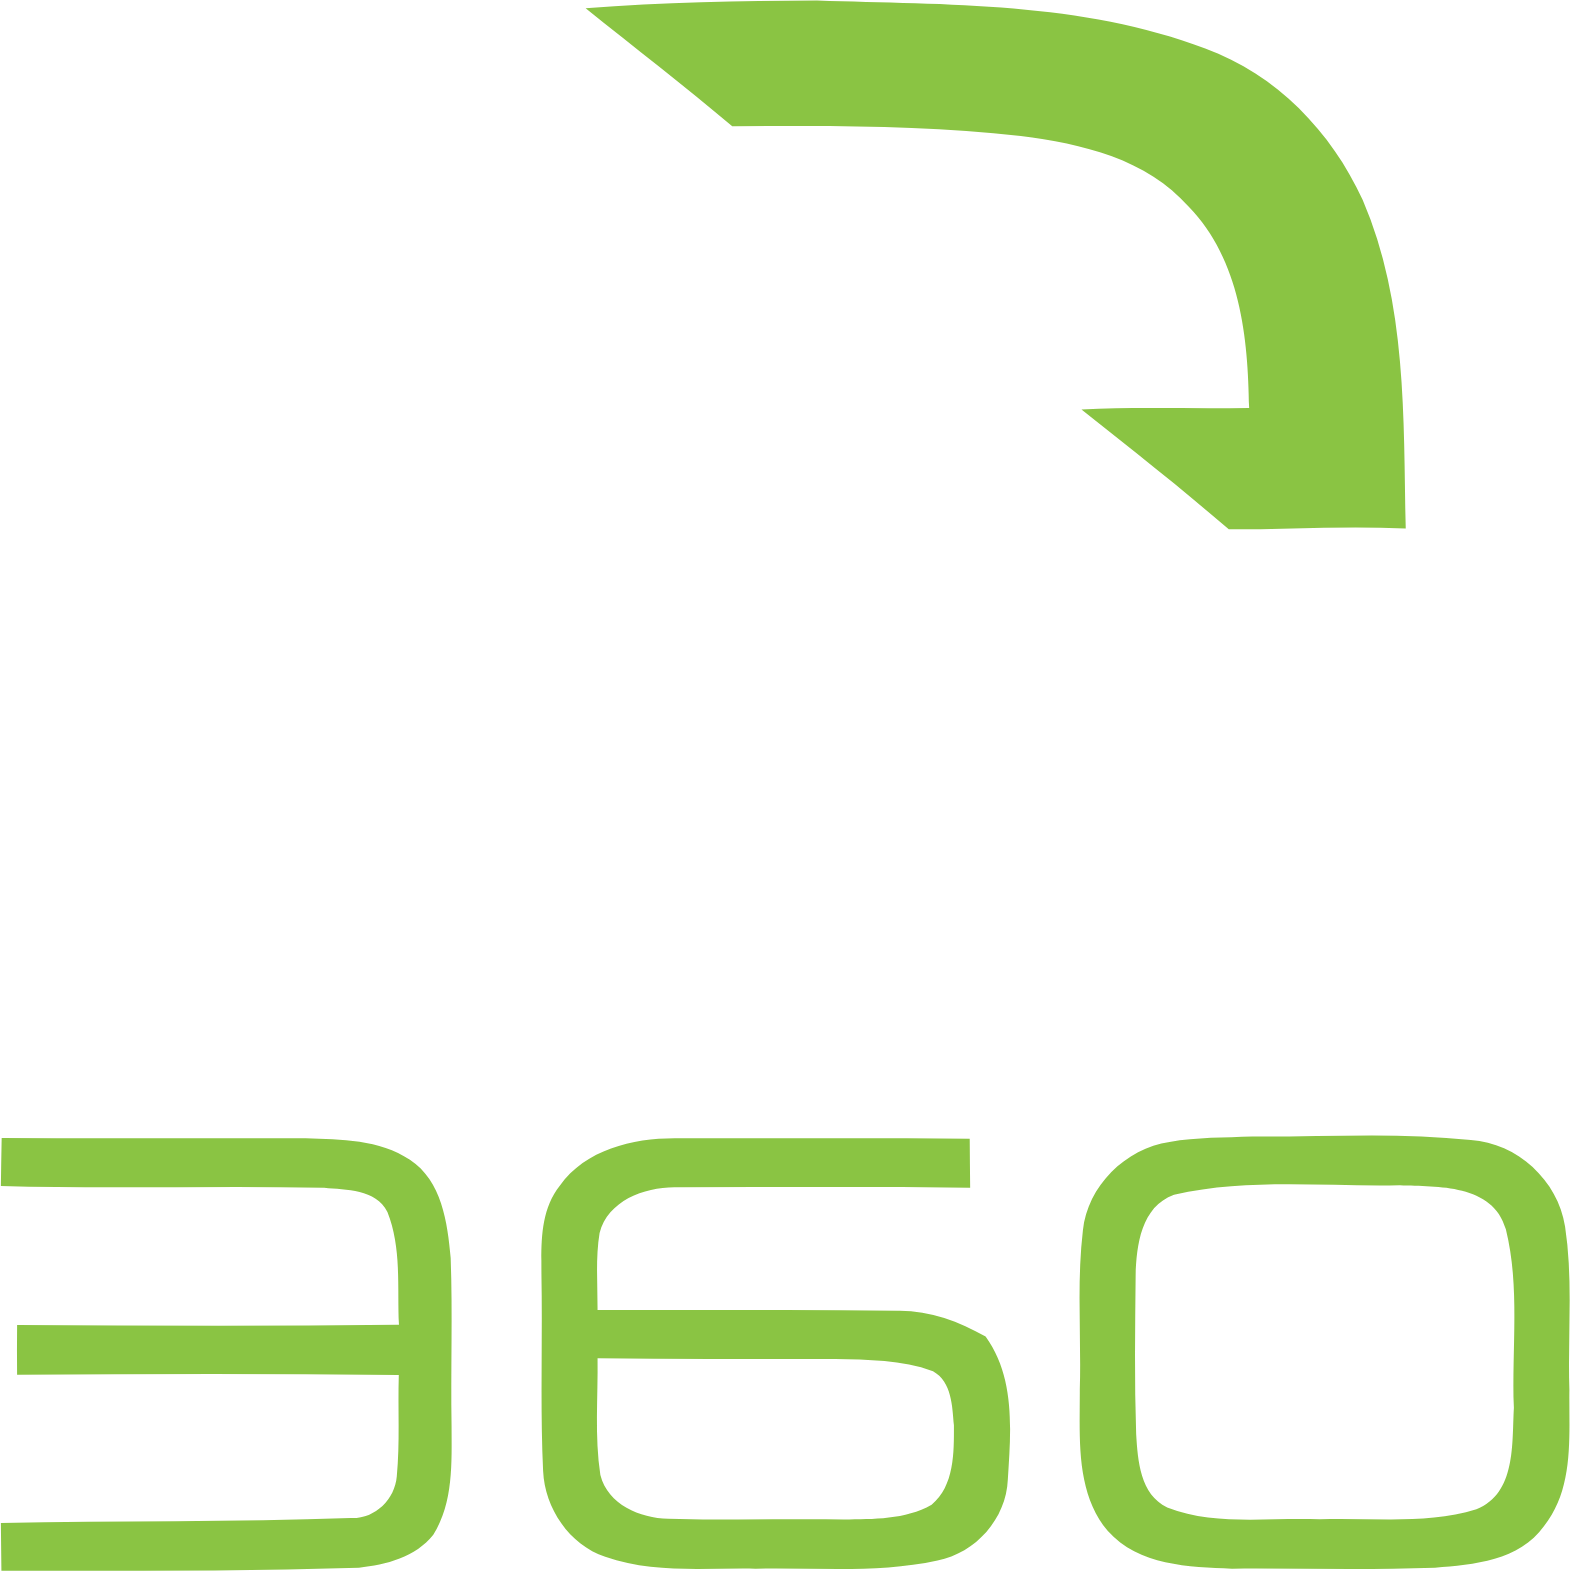 Expion360 logo for dark backgrounds (transparent PNG)